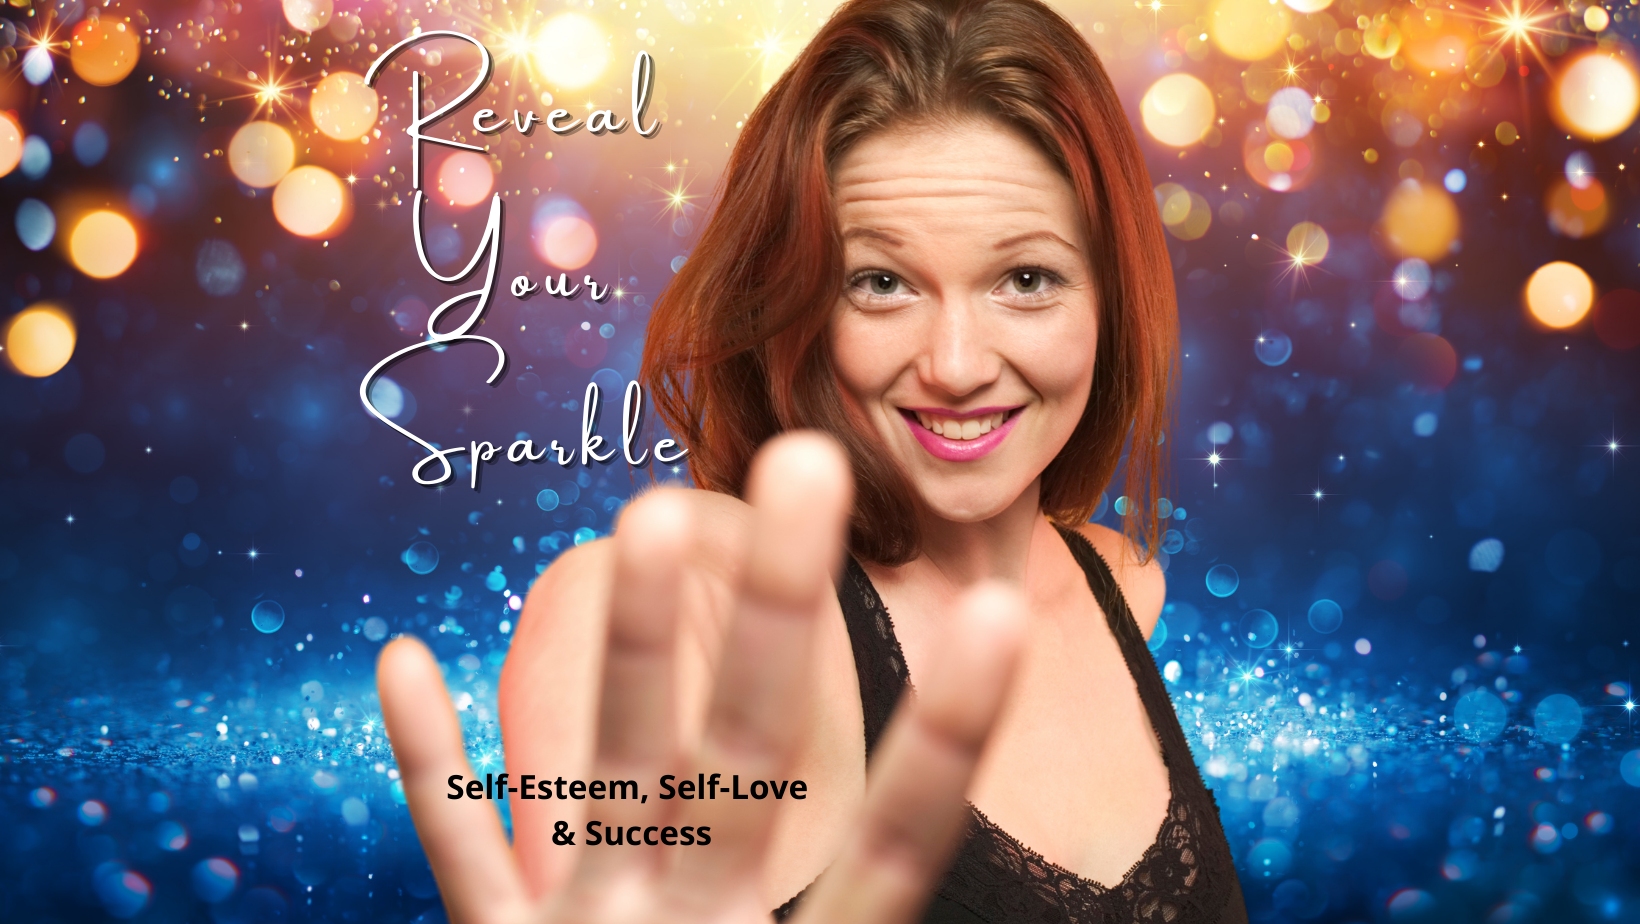 Reveal your sparkle self-esteem workshop